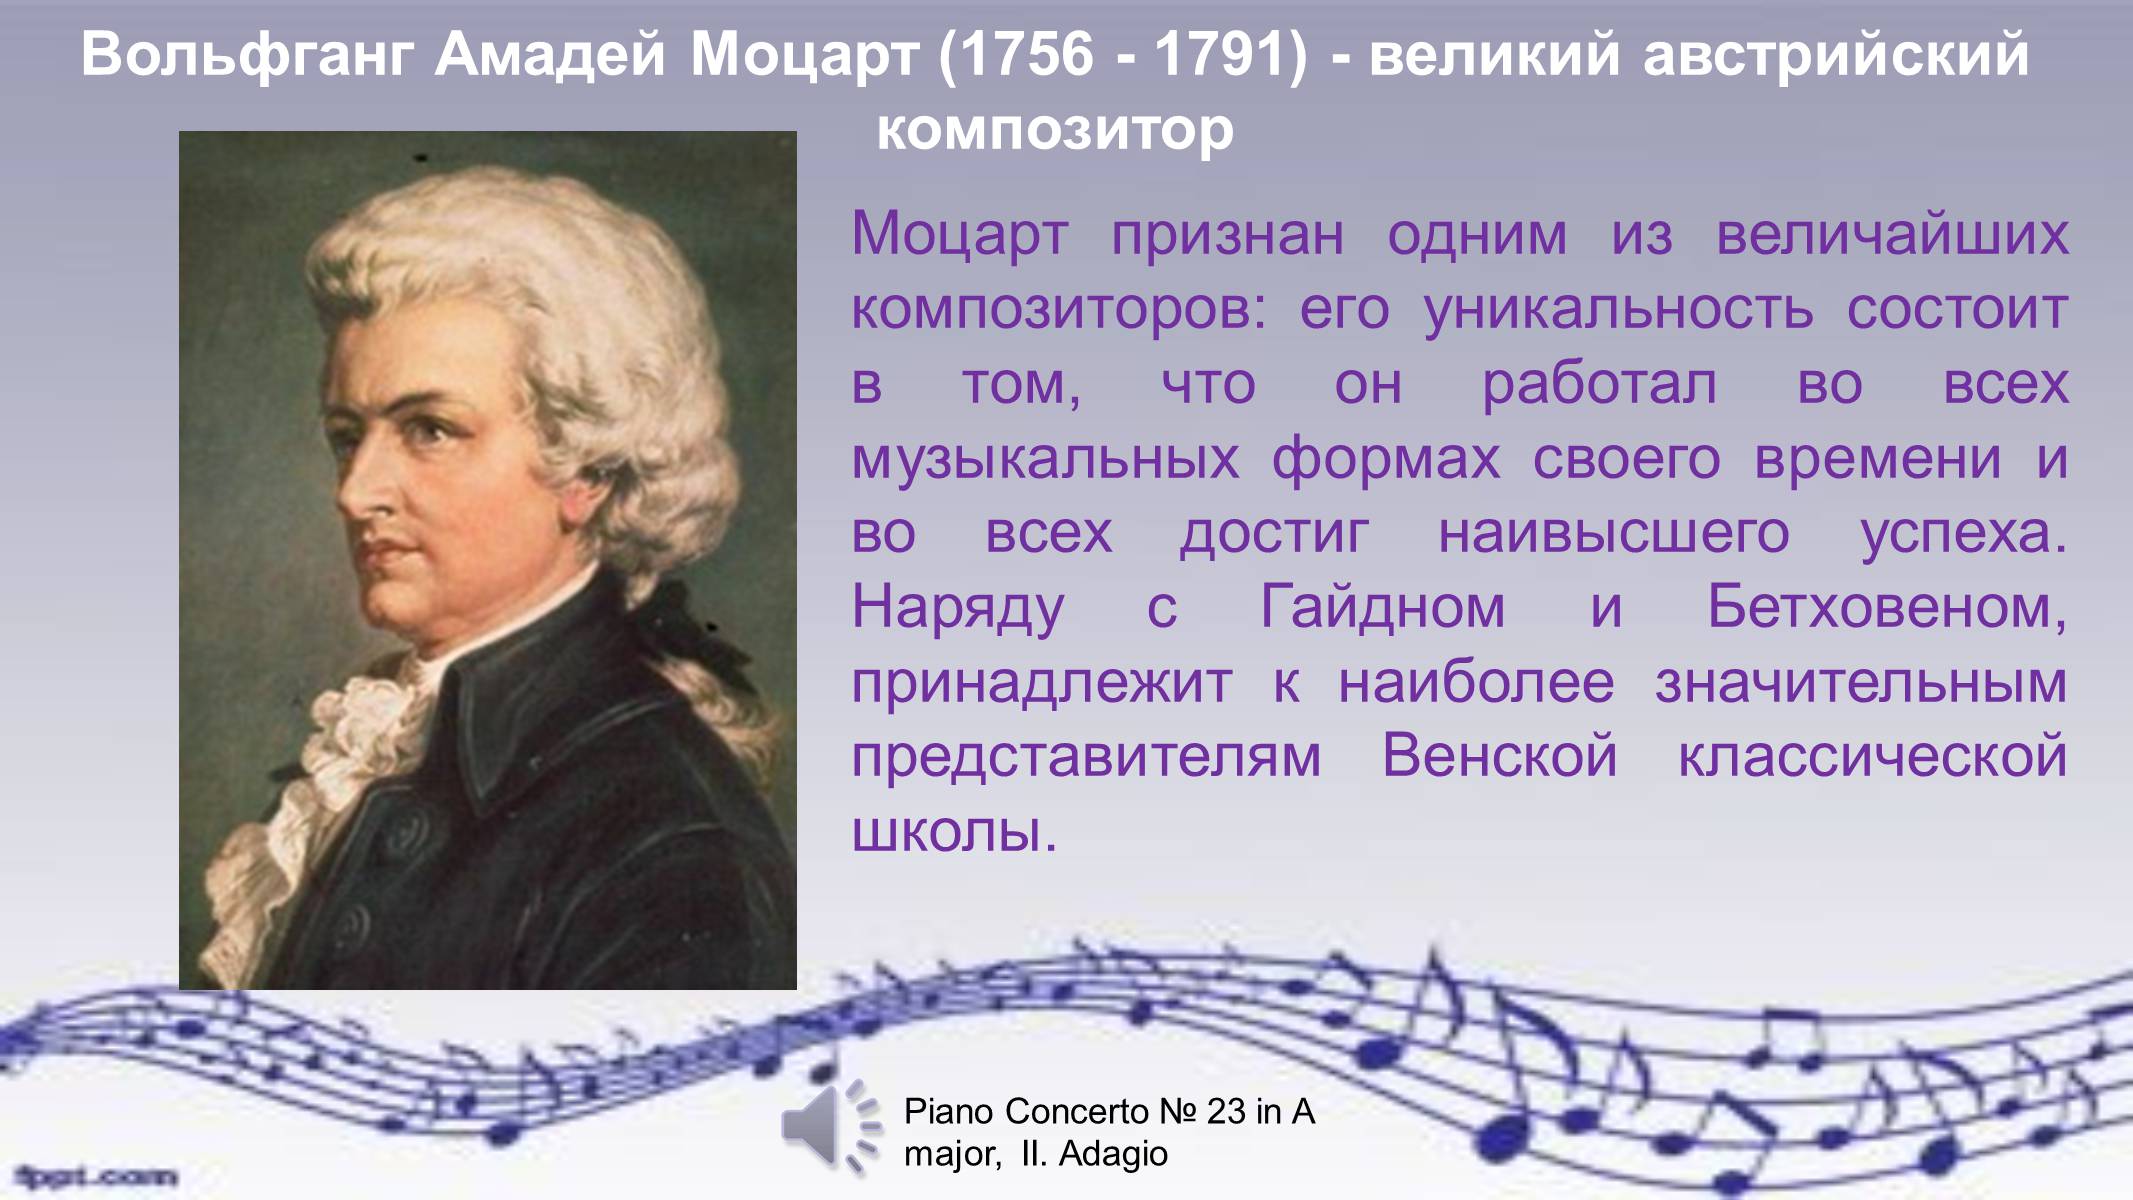 Жизнь и творчество в а моцарта. Моцарт Великий композитор. Биография Моцарта.